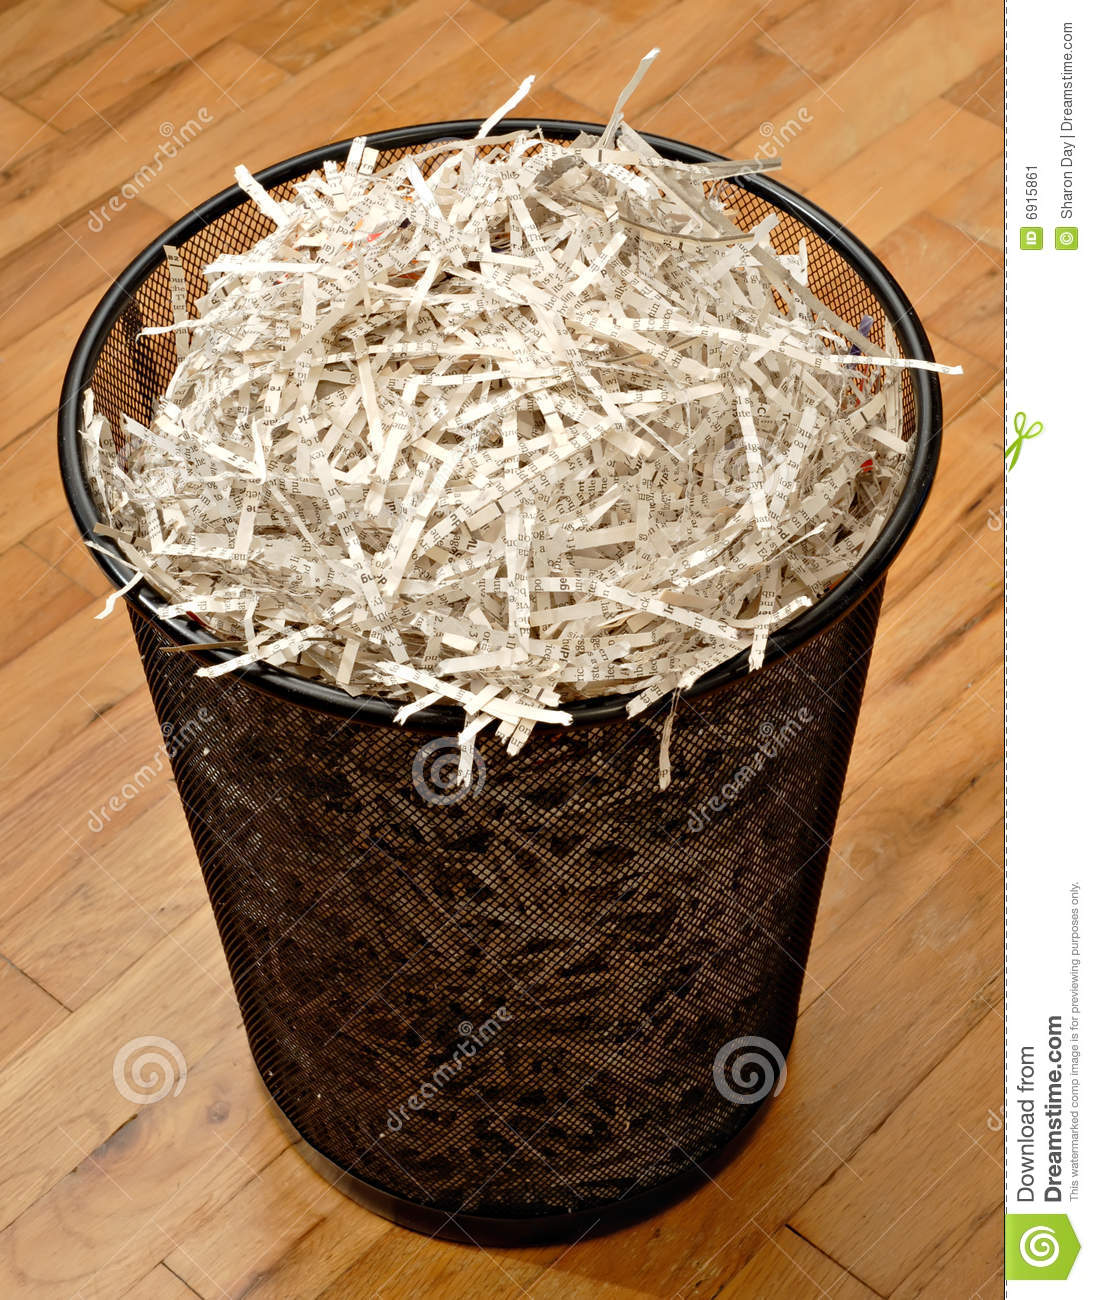 Wire Trash Basket Full Of Shredded Paper On A Hardwood Floor